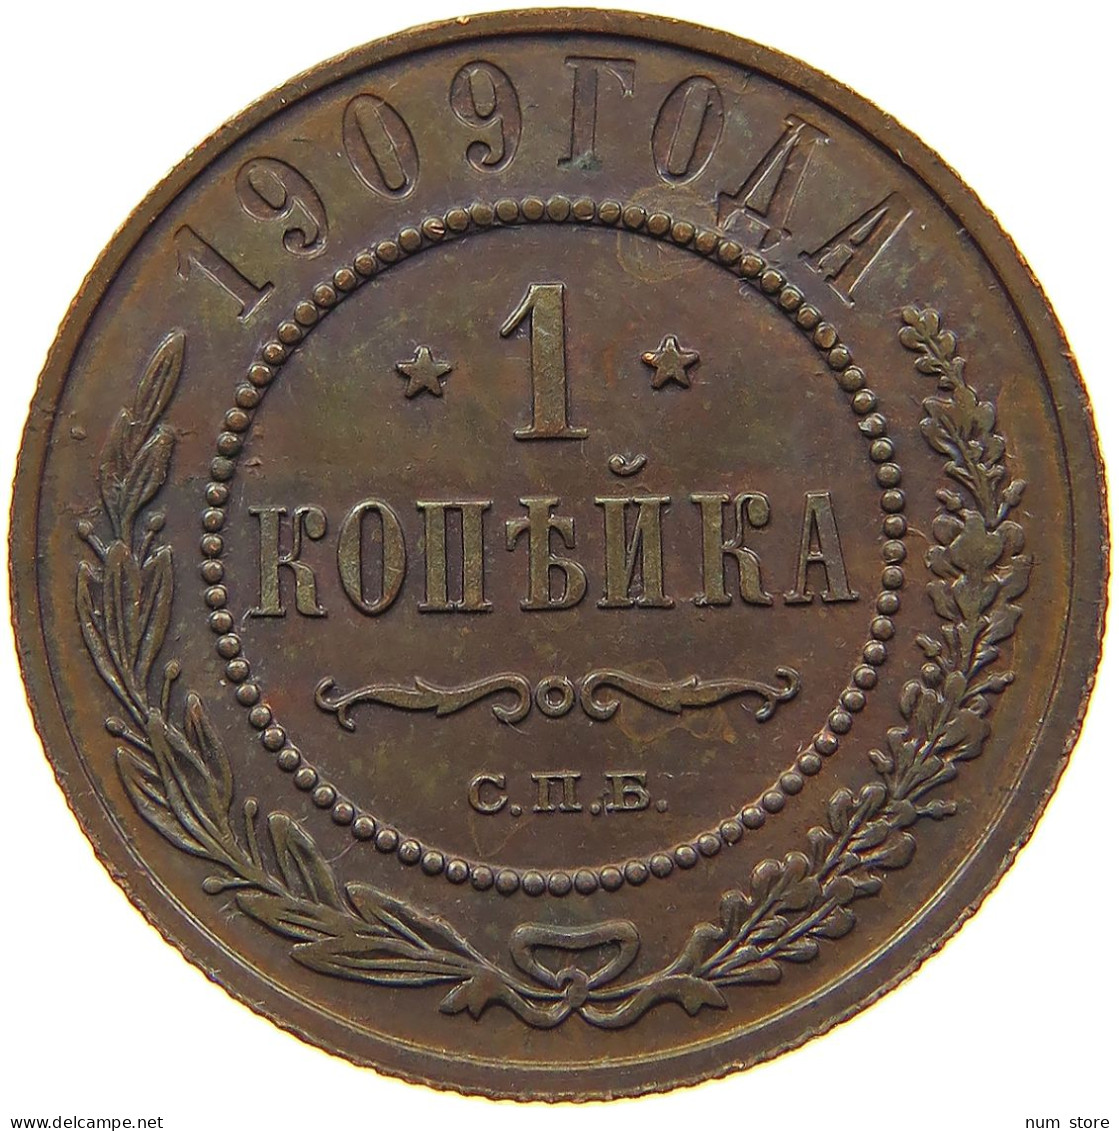 RUSSIA EMPIRE KOPEK 1909 NIKOLAUS II. (1894-1917) #MA 100917 - Russie